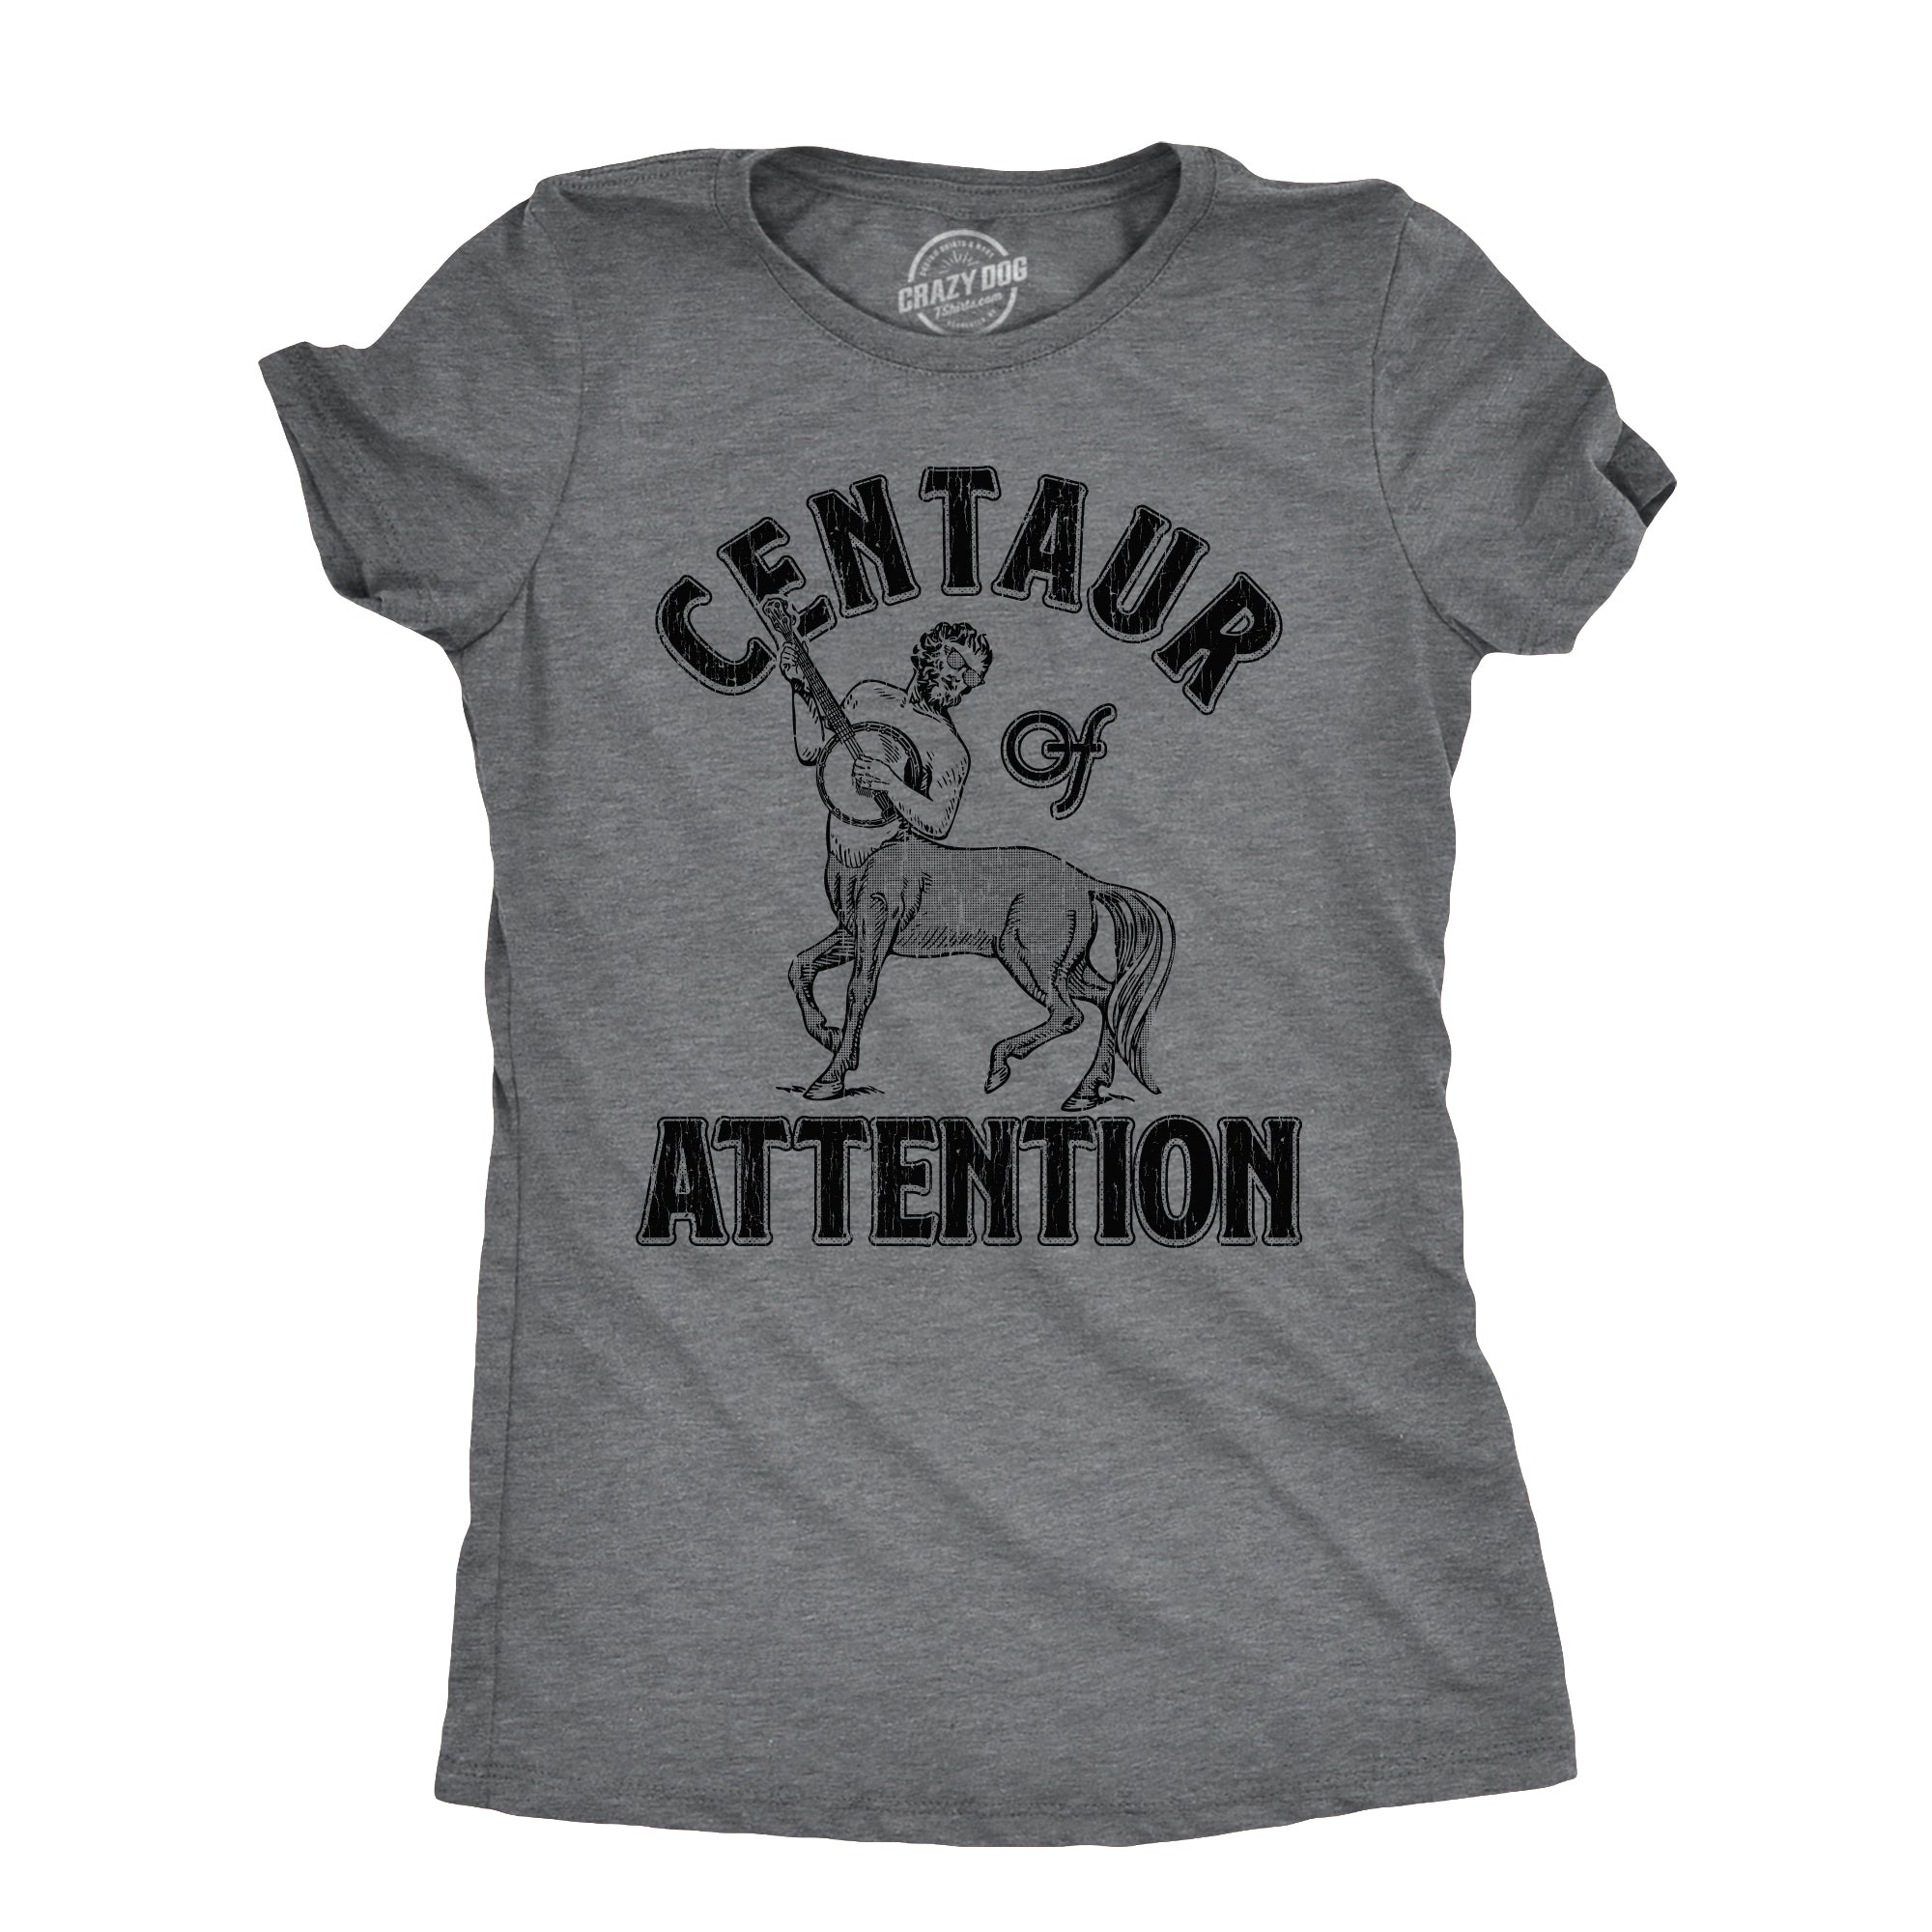 Funny Dark Heather Grey - CENTAUR Centaur Of Attention Womens T Shirt Nerdy Animal sarcastic Tee